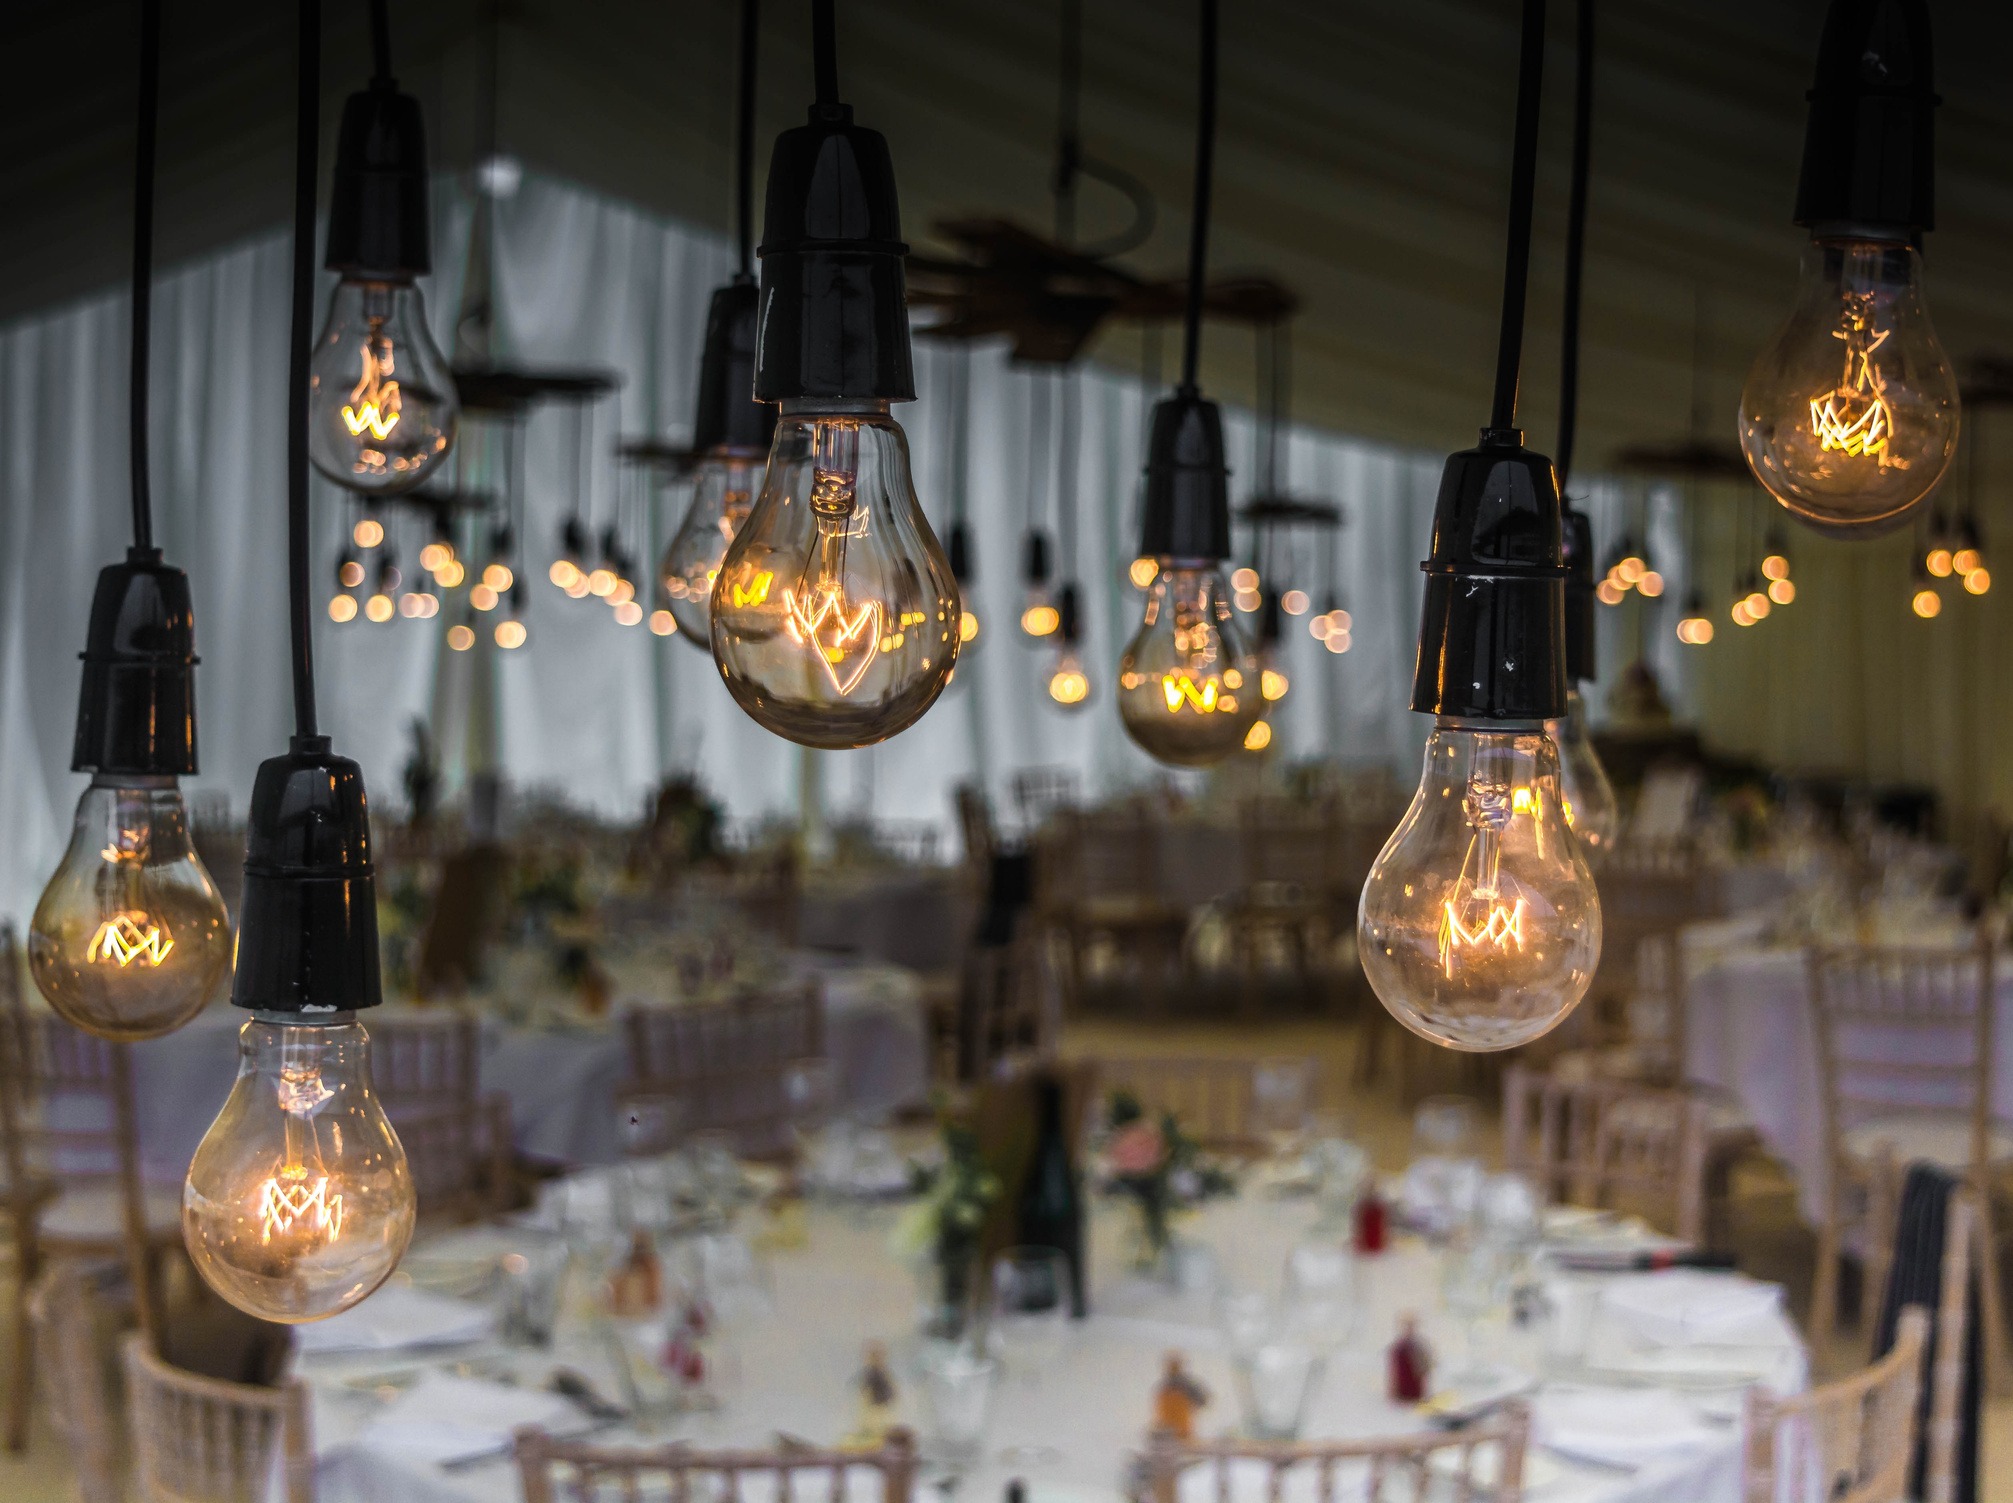 Decorative Light Bulbs at a Wedding Party